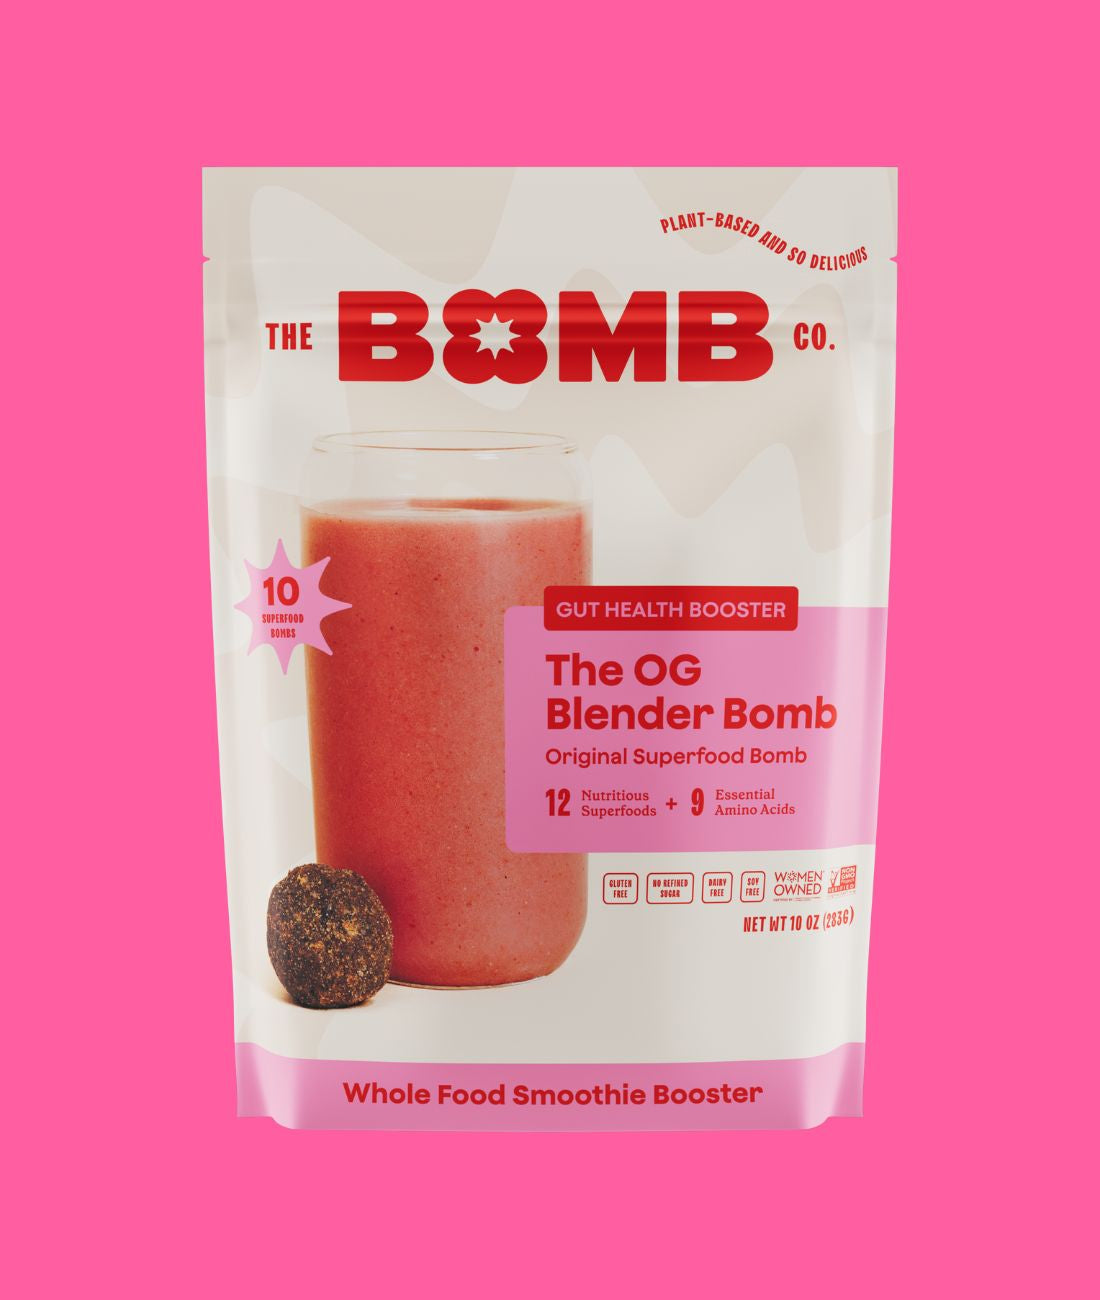 🚨 new protein shake recipe alert 🚨 I literally lick the blender